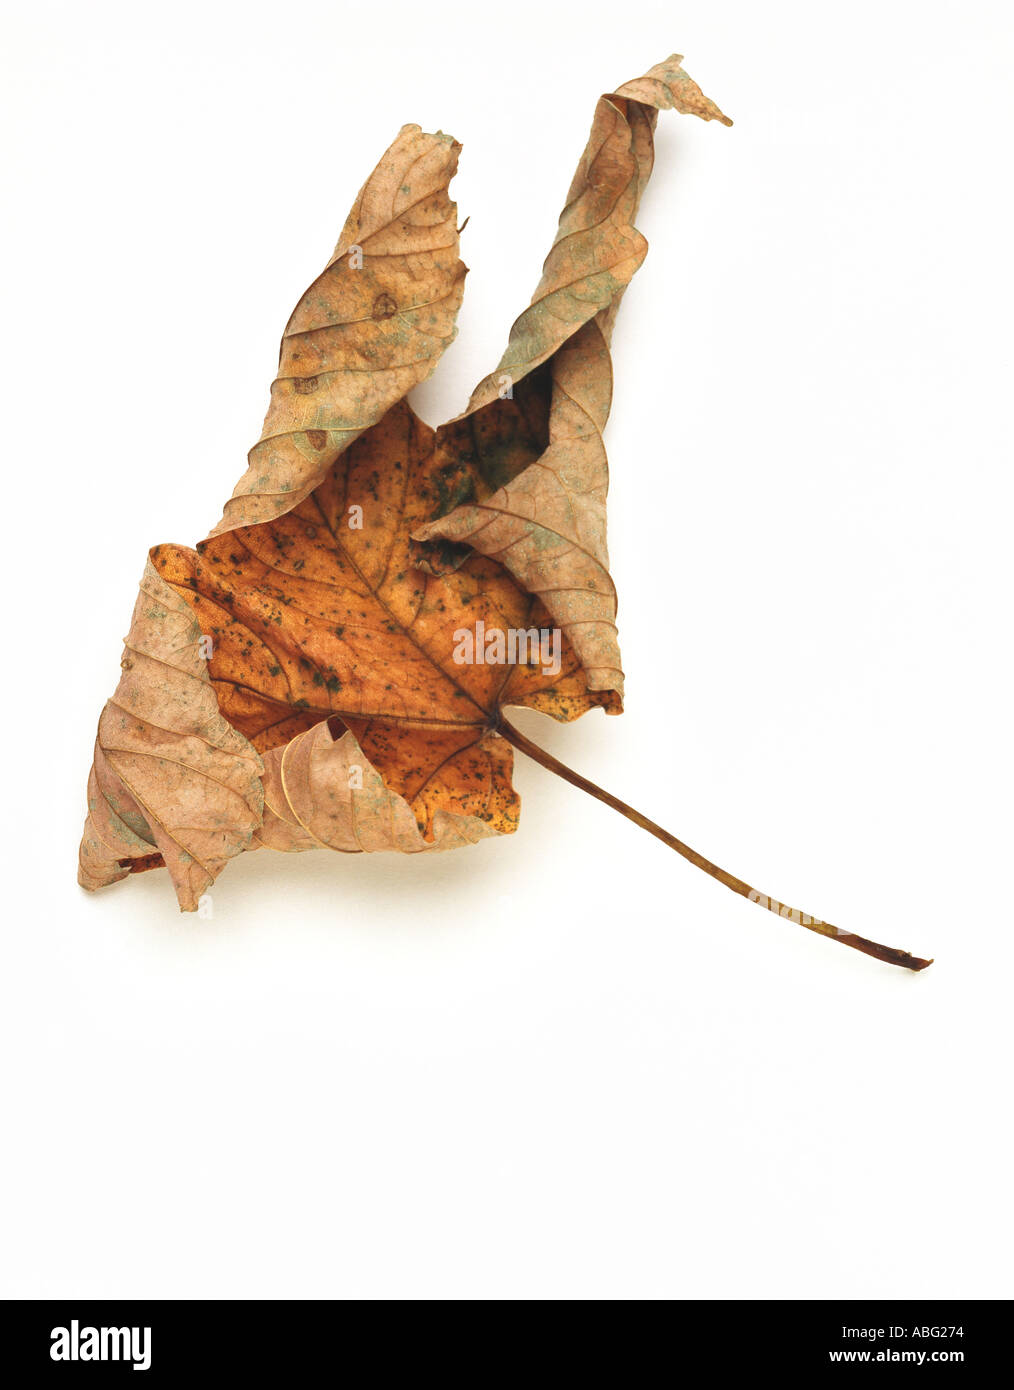 autumn leaf golden colourful fallen tree white background Stock Photo